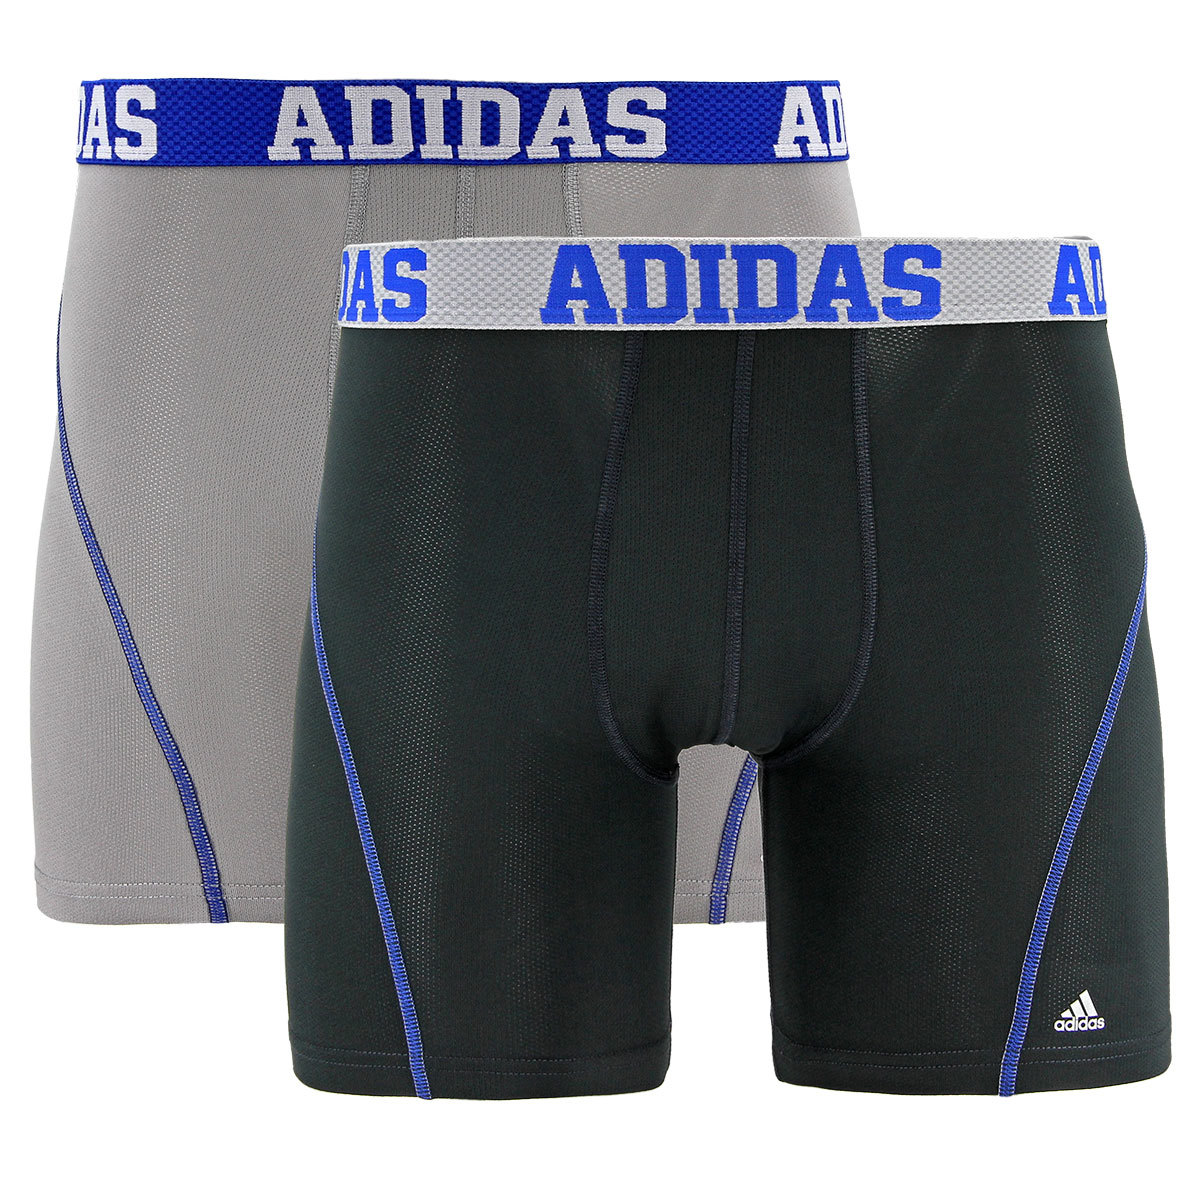 Adidas Men's Sport Performance Climacool Boxer Briefs, 2 Pack -  5141655